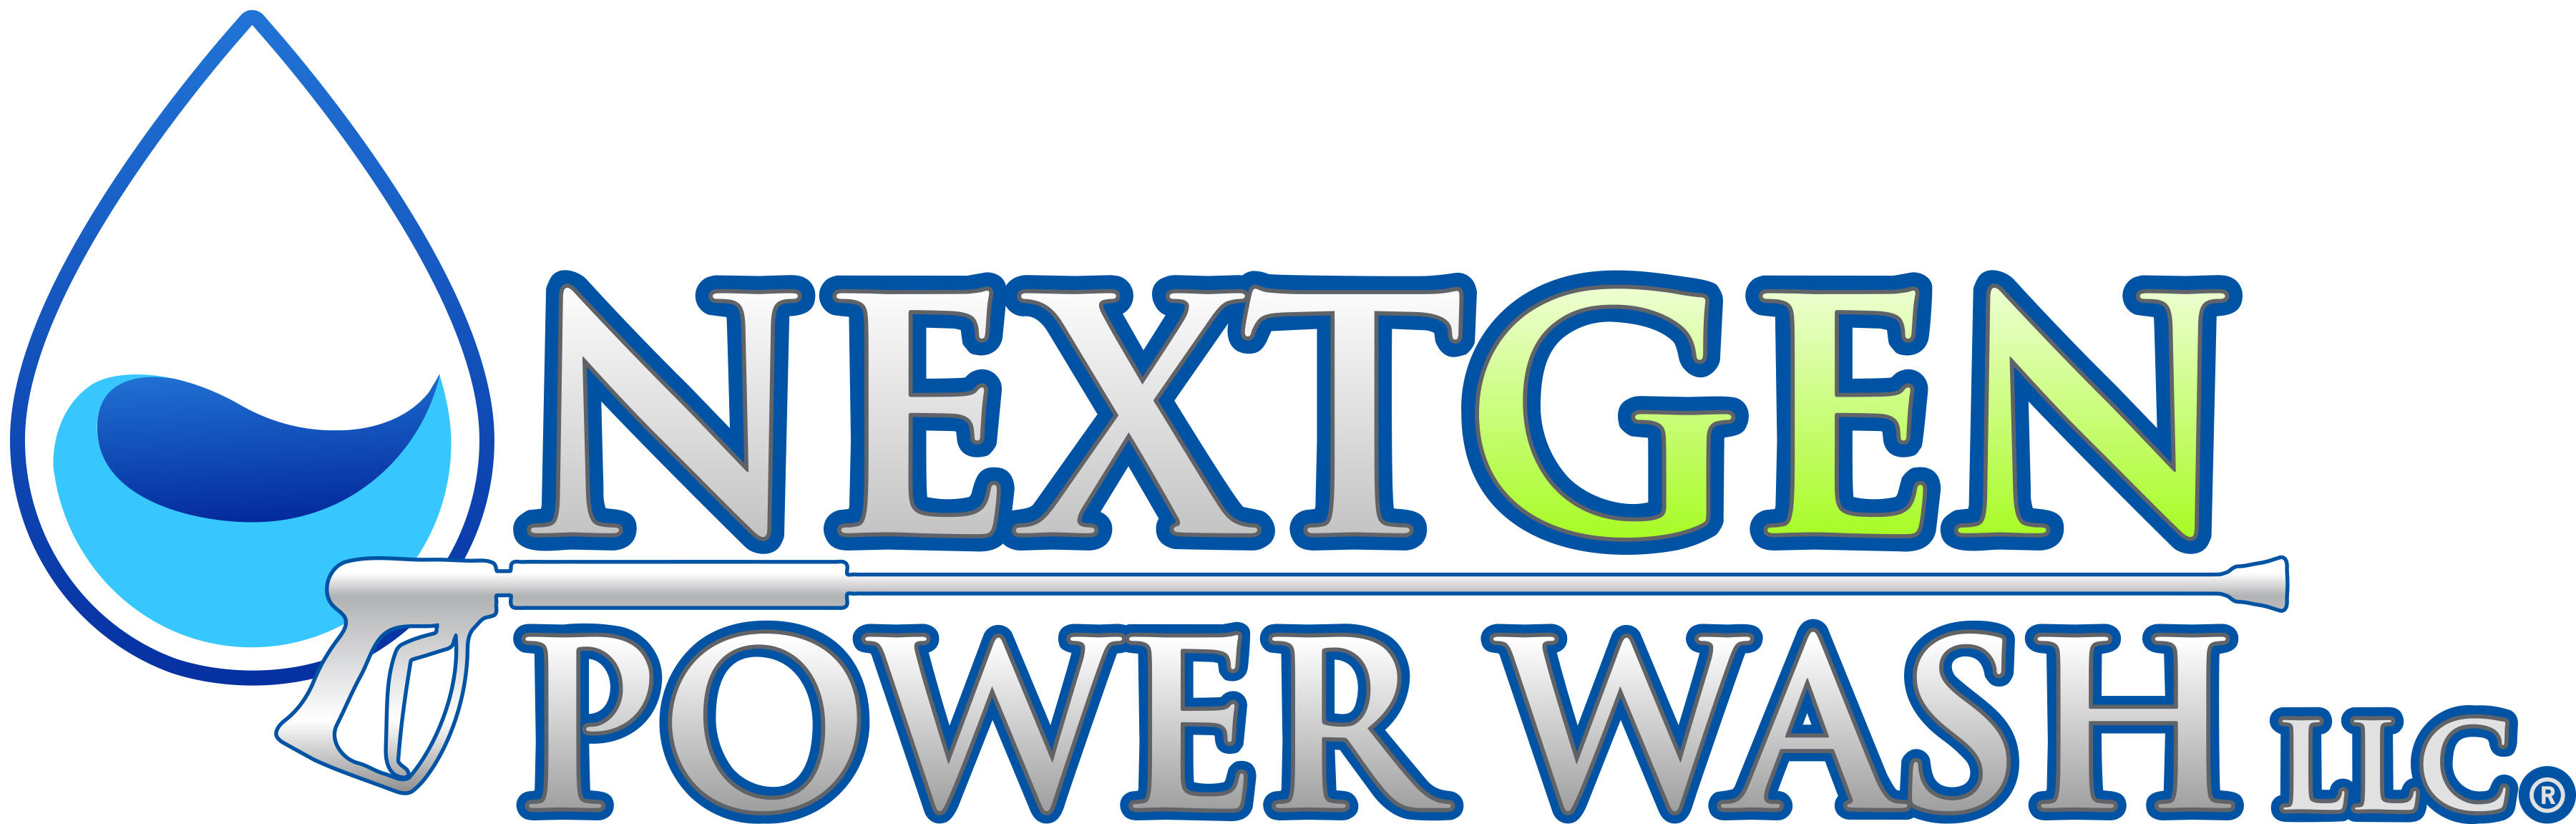 NextGen Power Wash LLC Logo Watsontown Pennsylvania